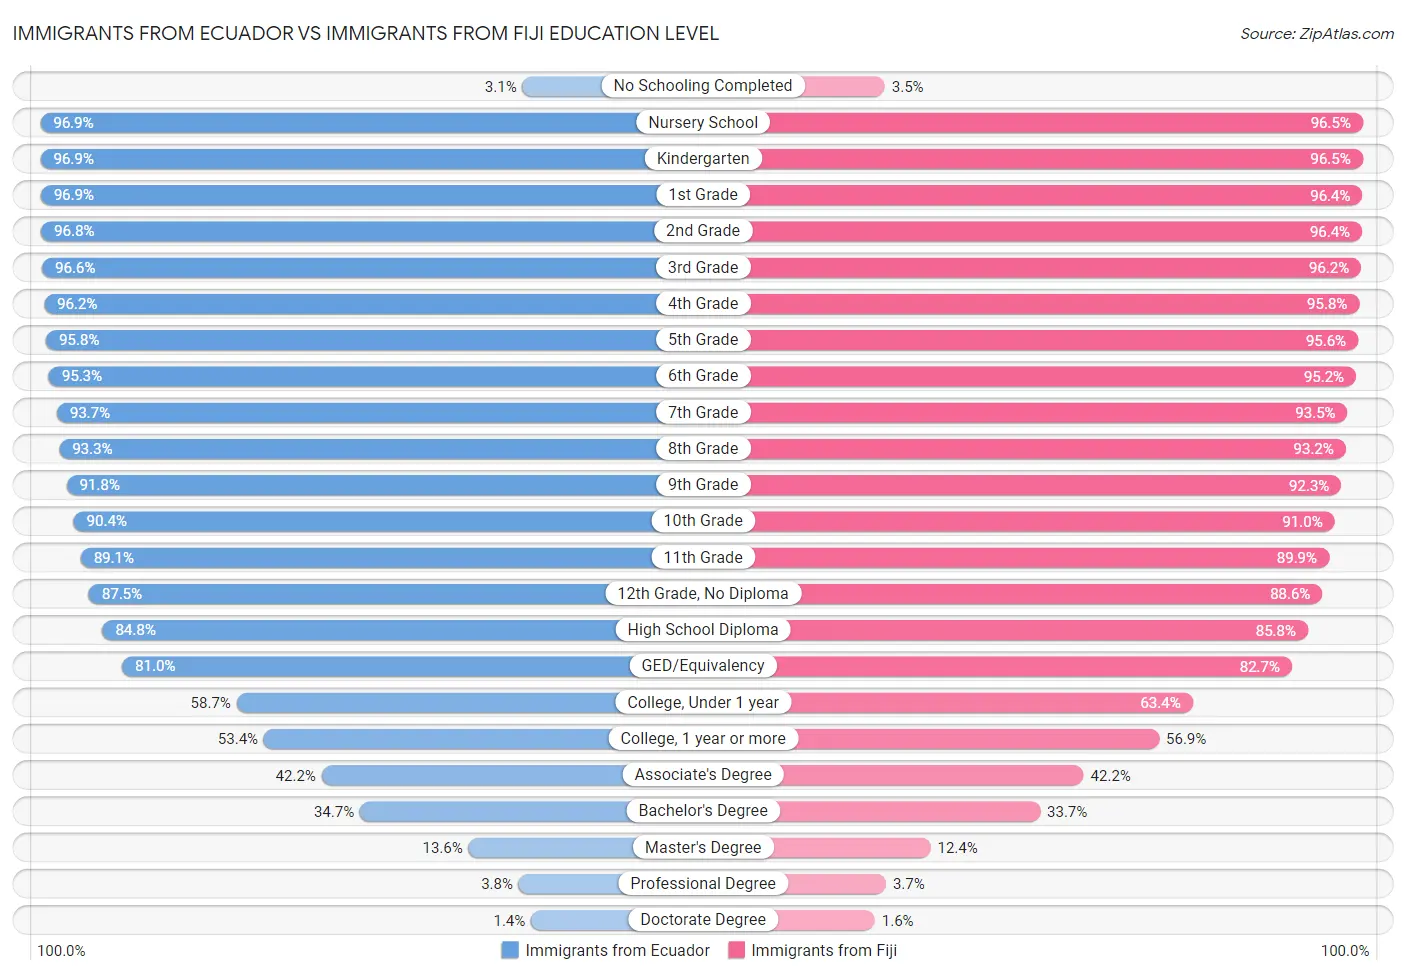 Immigrants from Ecuador vs Immigrants from Fiji Education Level